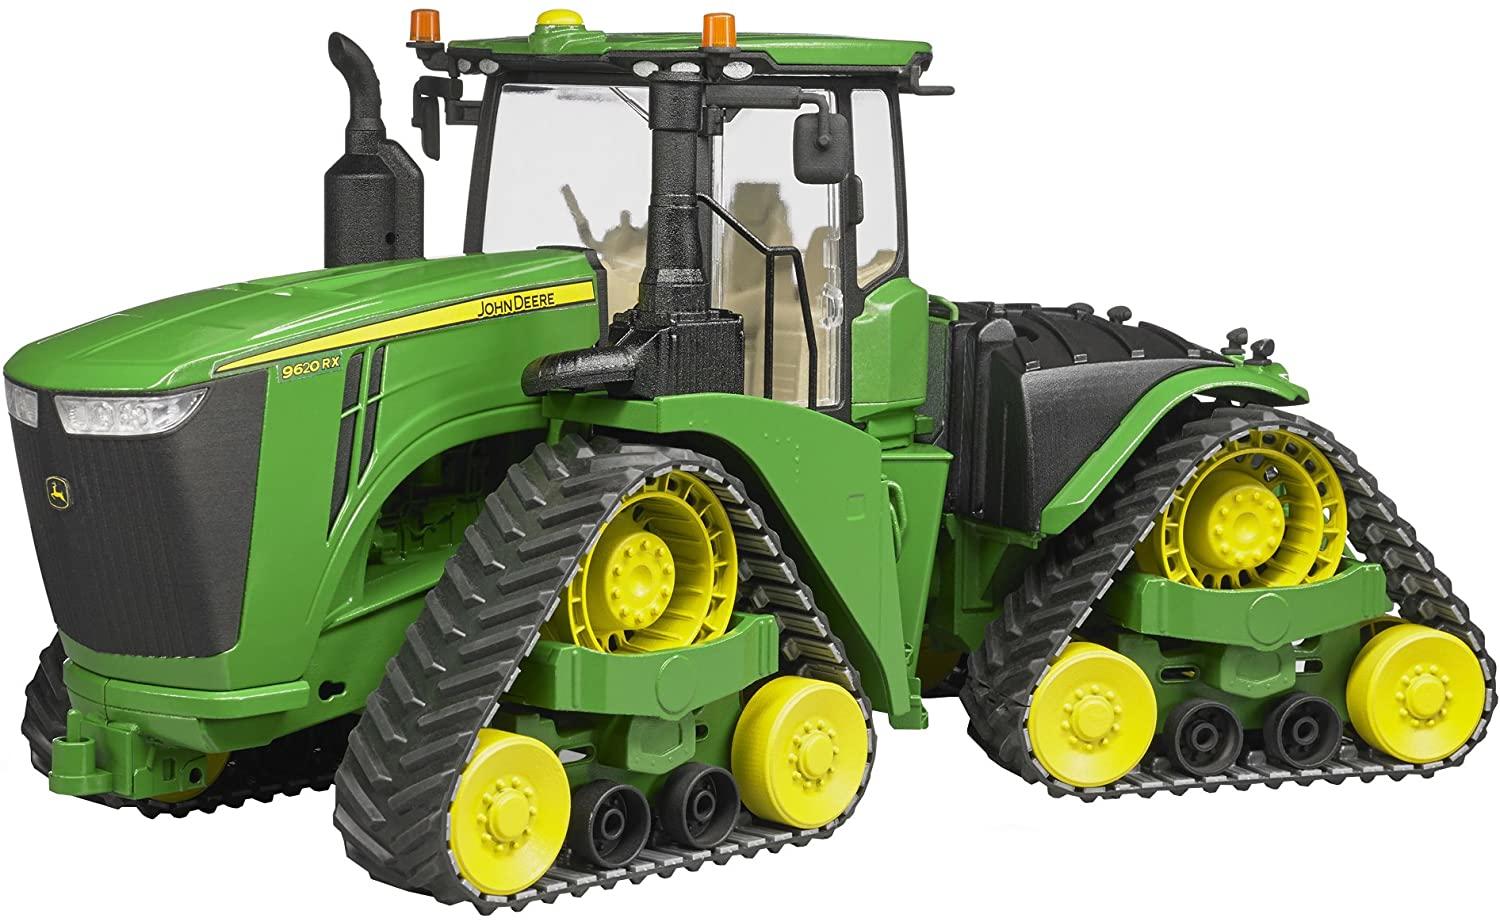 Bruder 04055 John Derre 9620RX Tractor Toymaster Ballina